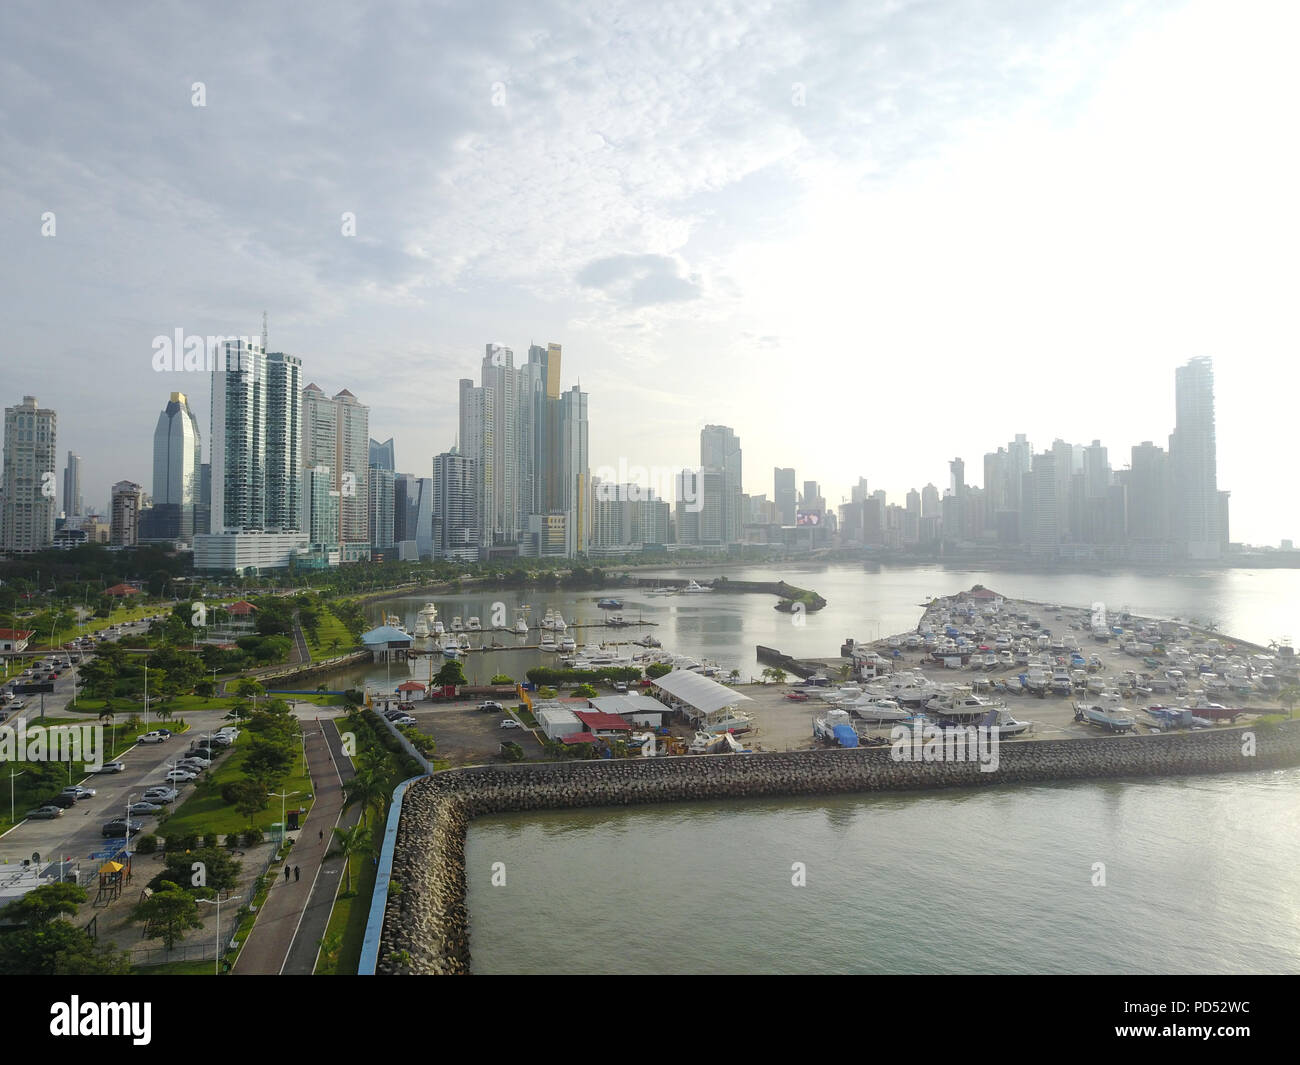 PANAMA CITY, Panama - 14.September 2017: Panama City ist die modernste Stadt in Mittelamerika. Stockfoto